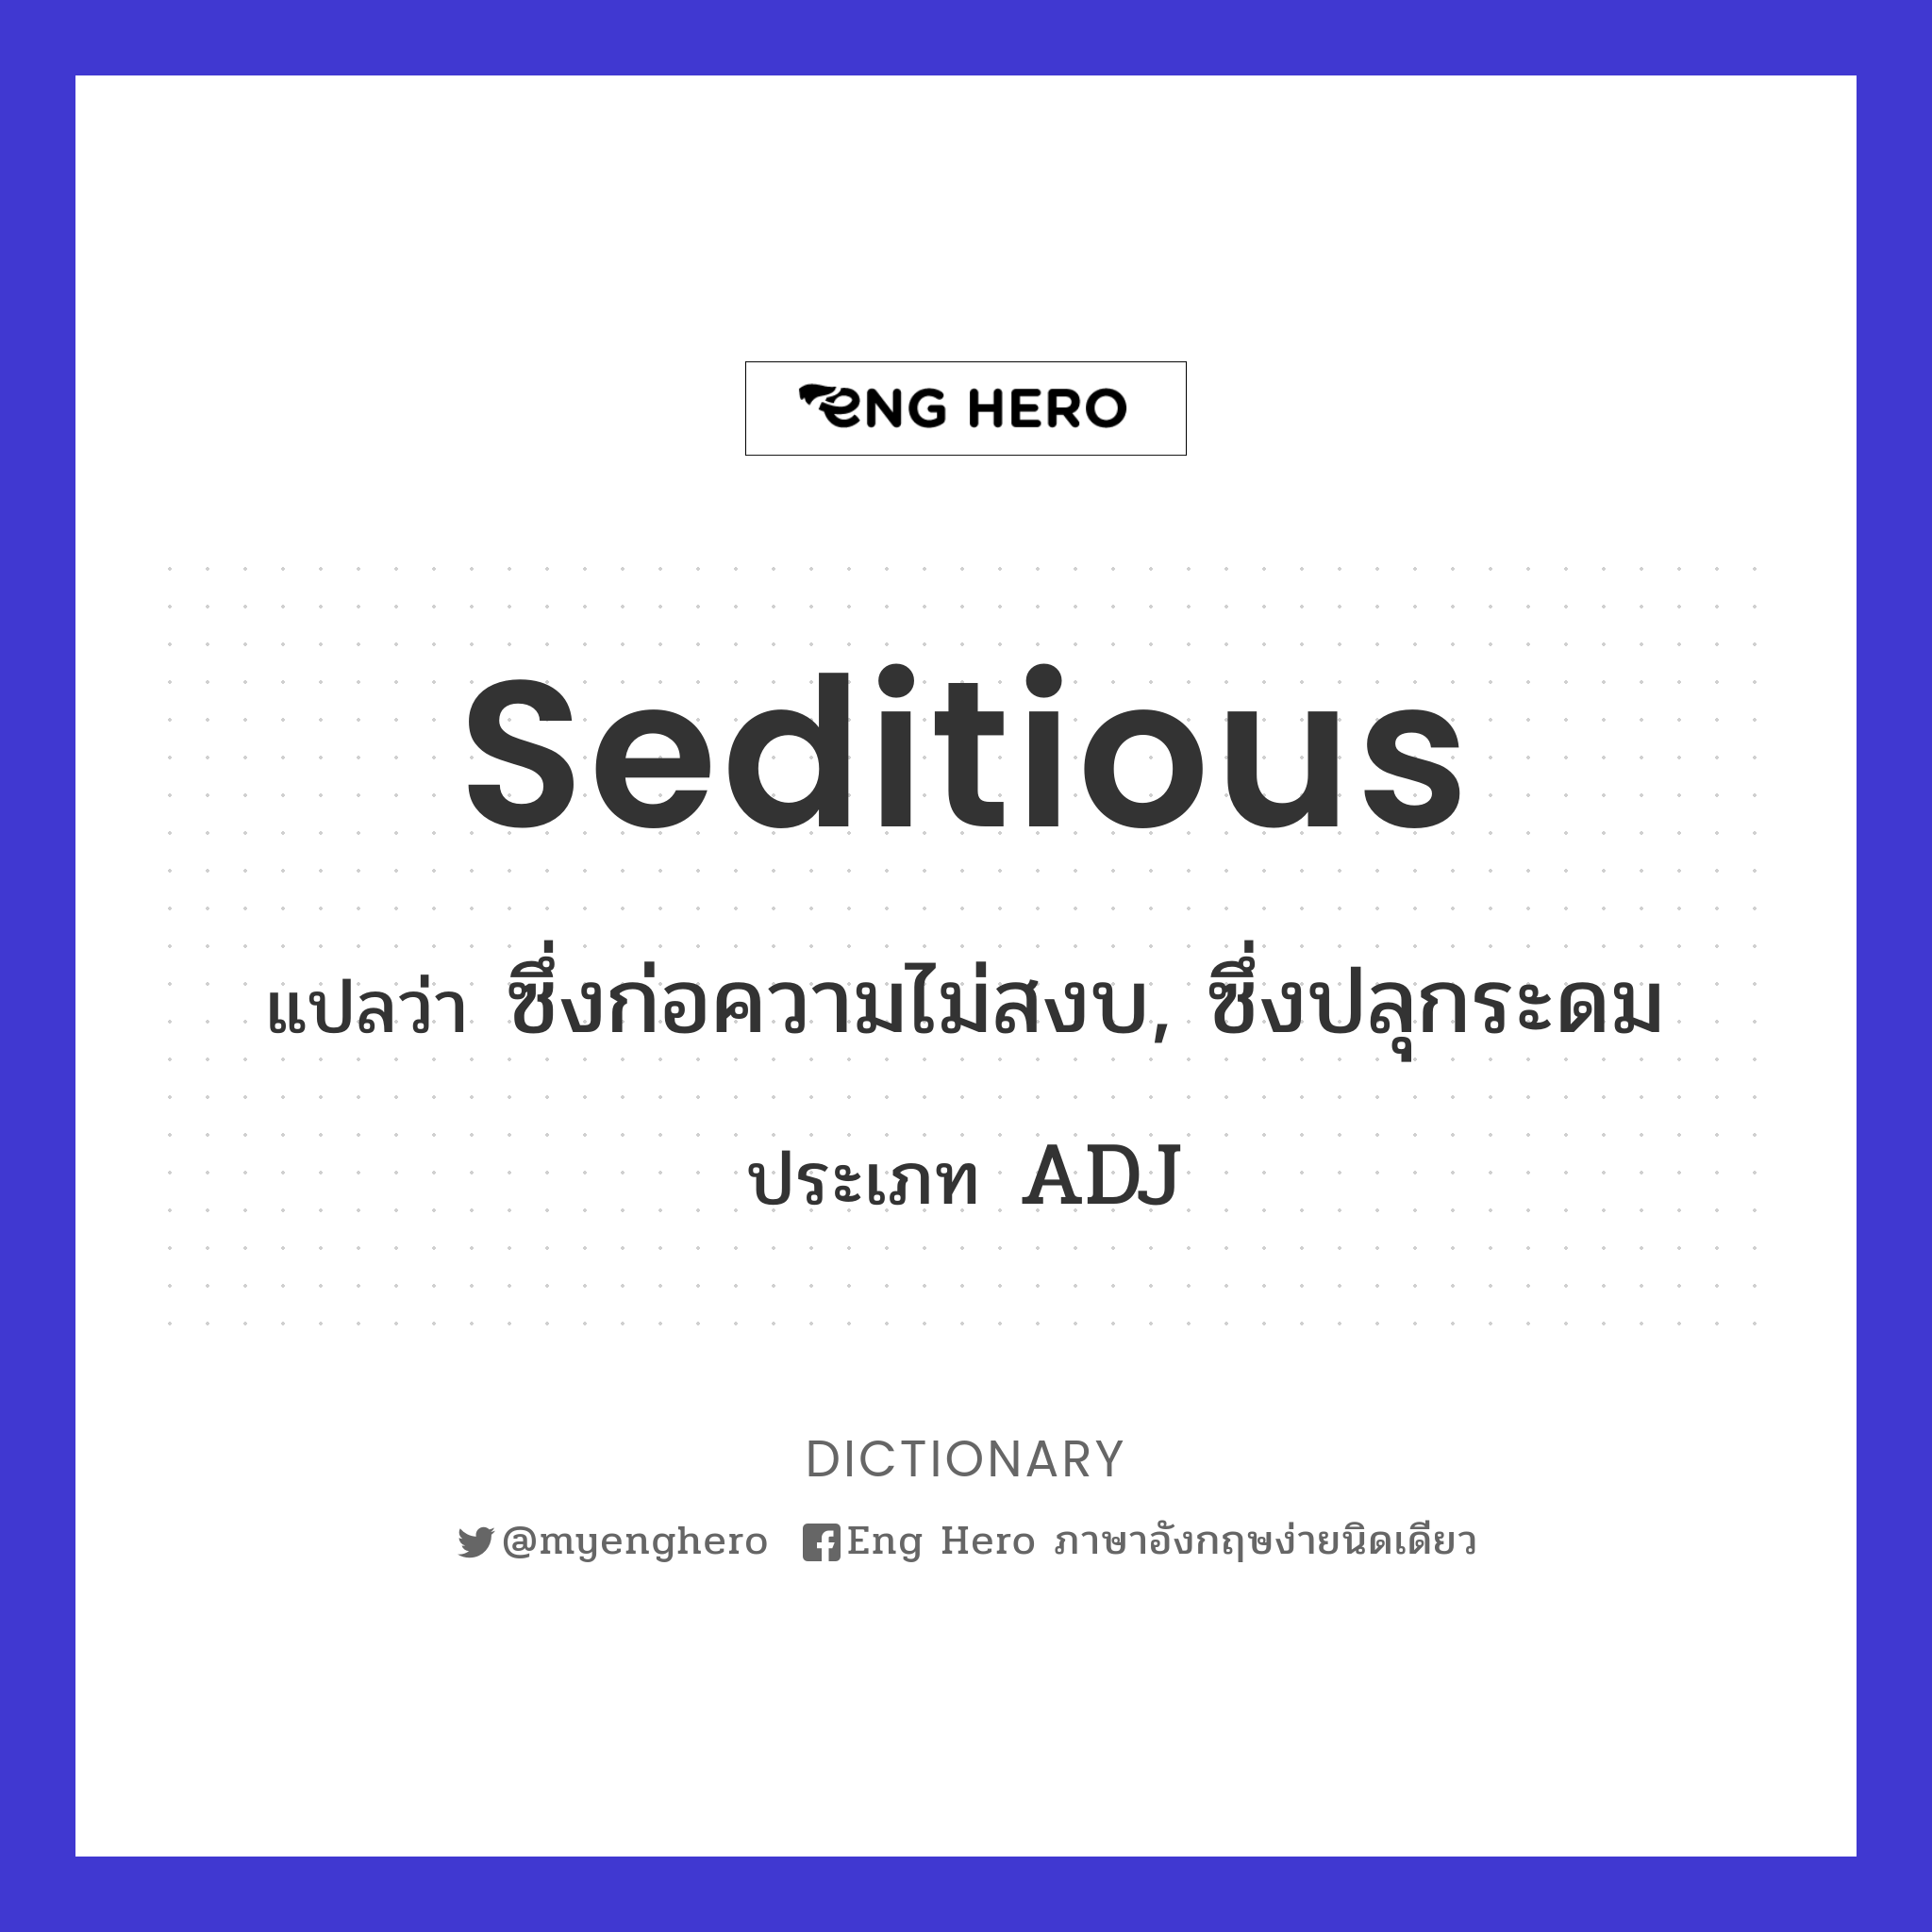 seditious